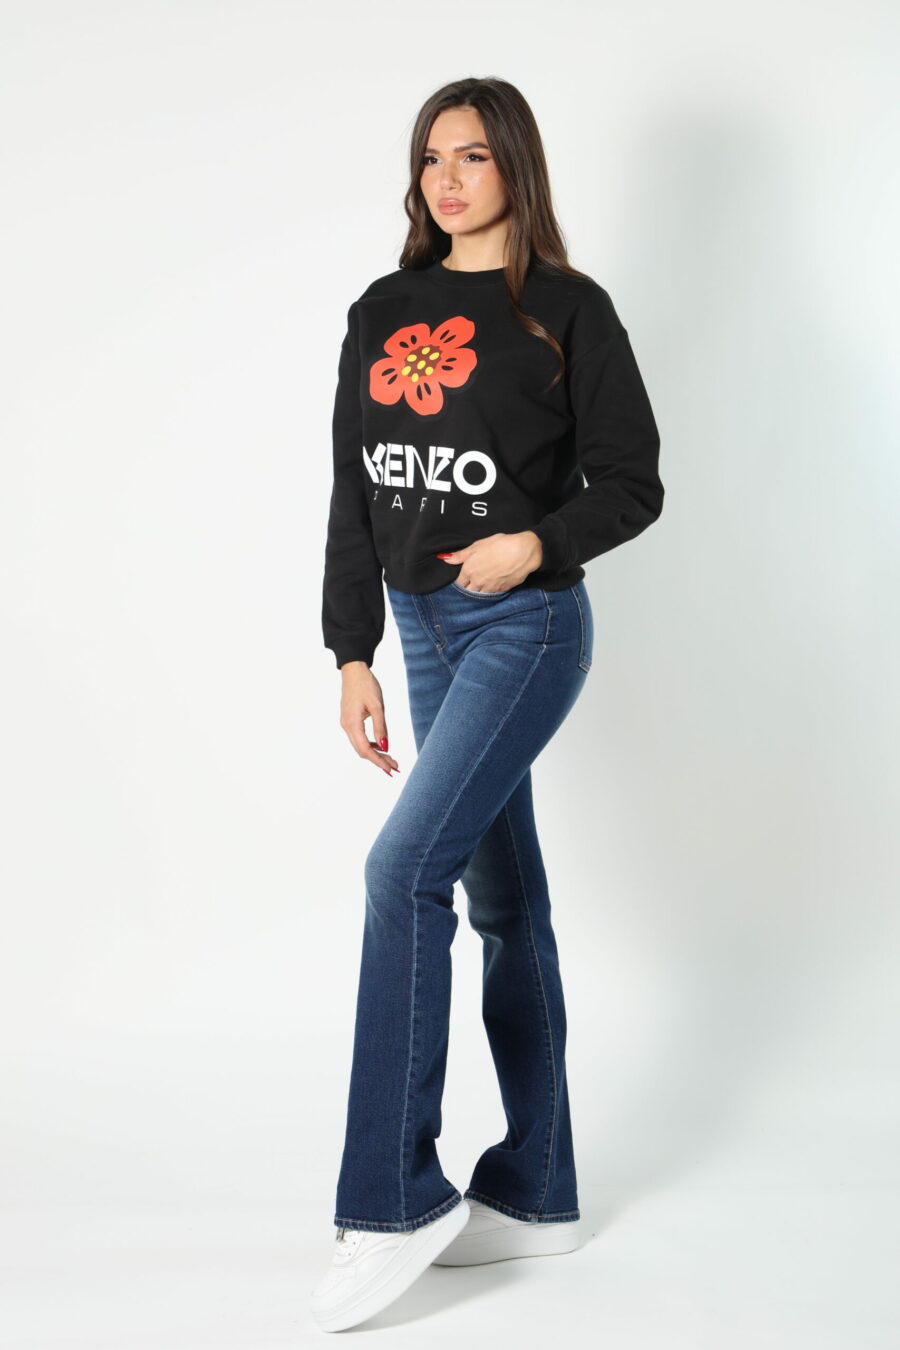 Black sweatshirt with "boke flower" logo - 8052865435499 345 scaled